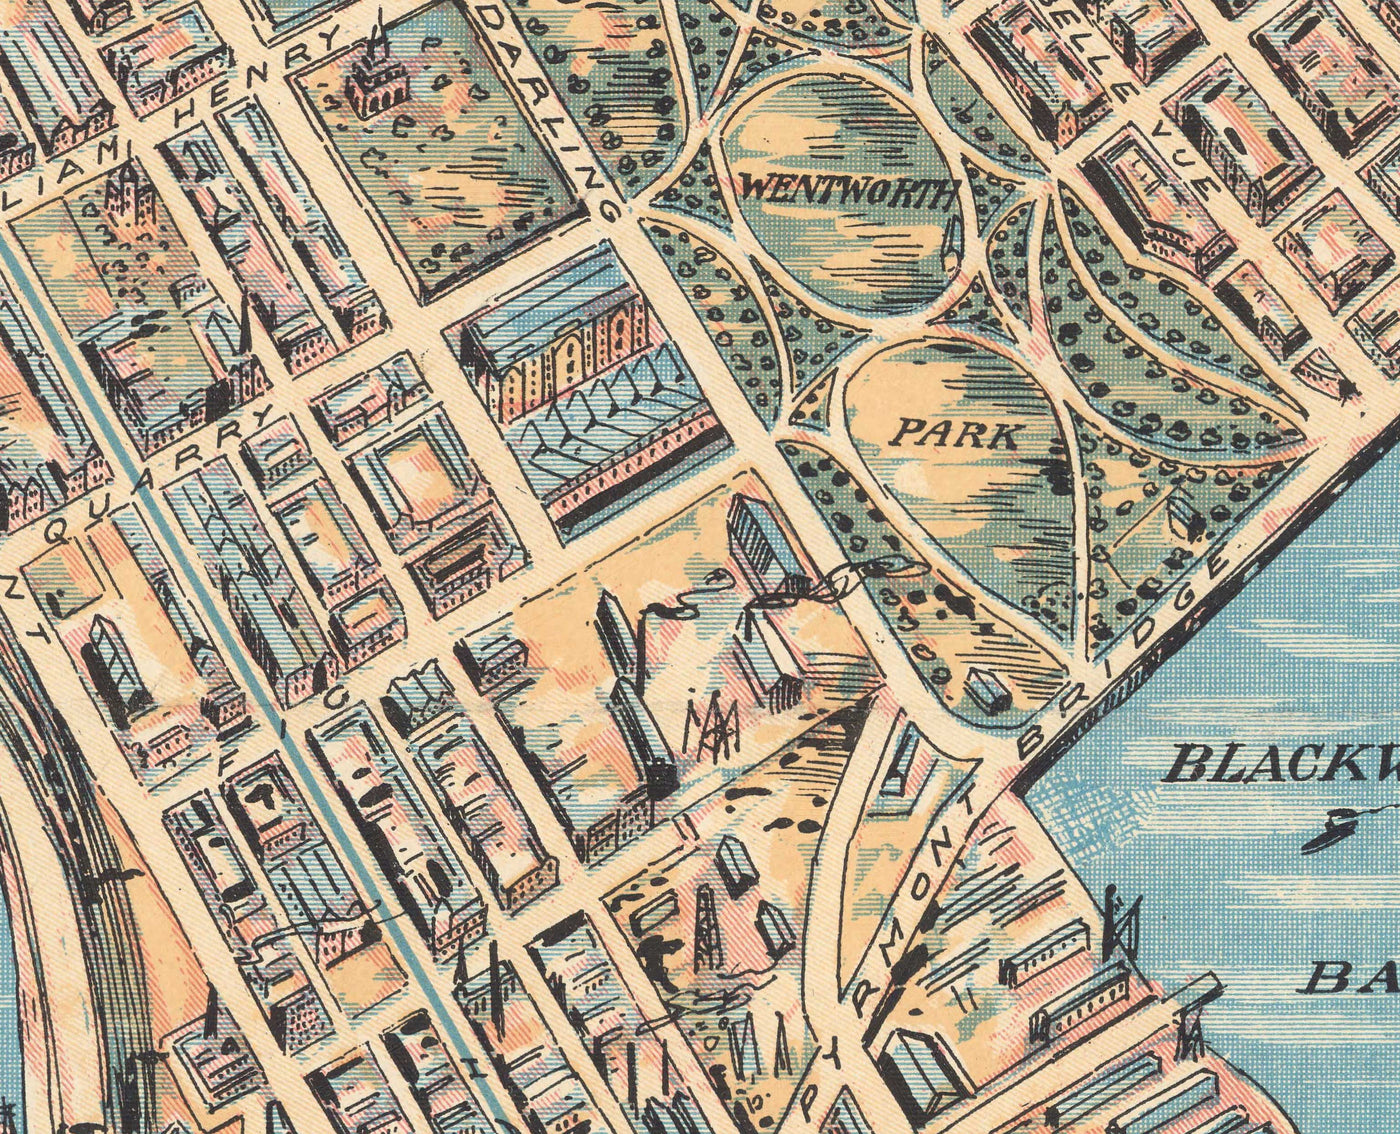 Old Map of Sydney 1902 by John Andrew - Coves Bays, Harbours, Port Jackson, Central Station, Botanic Garden